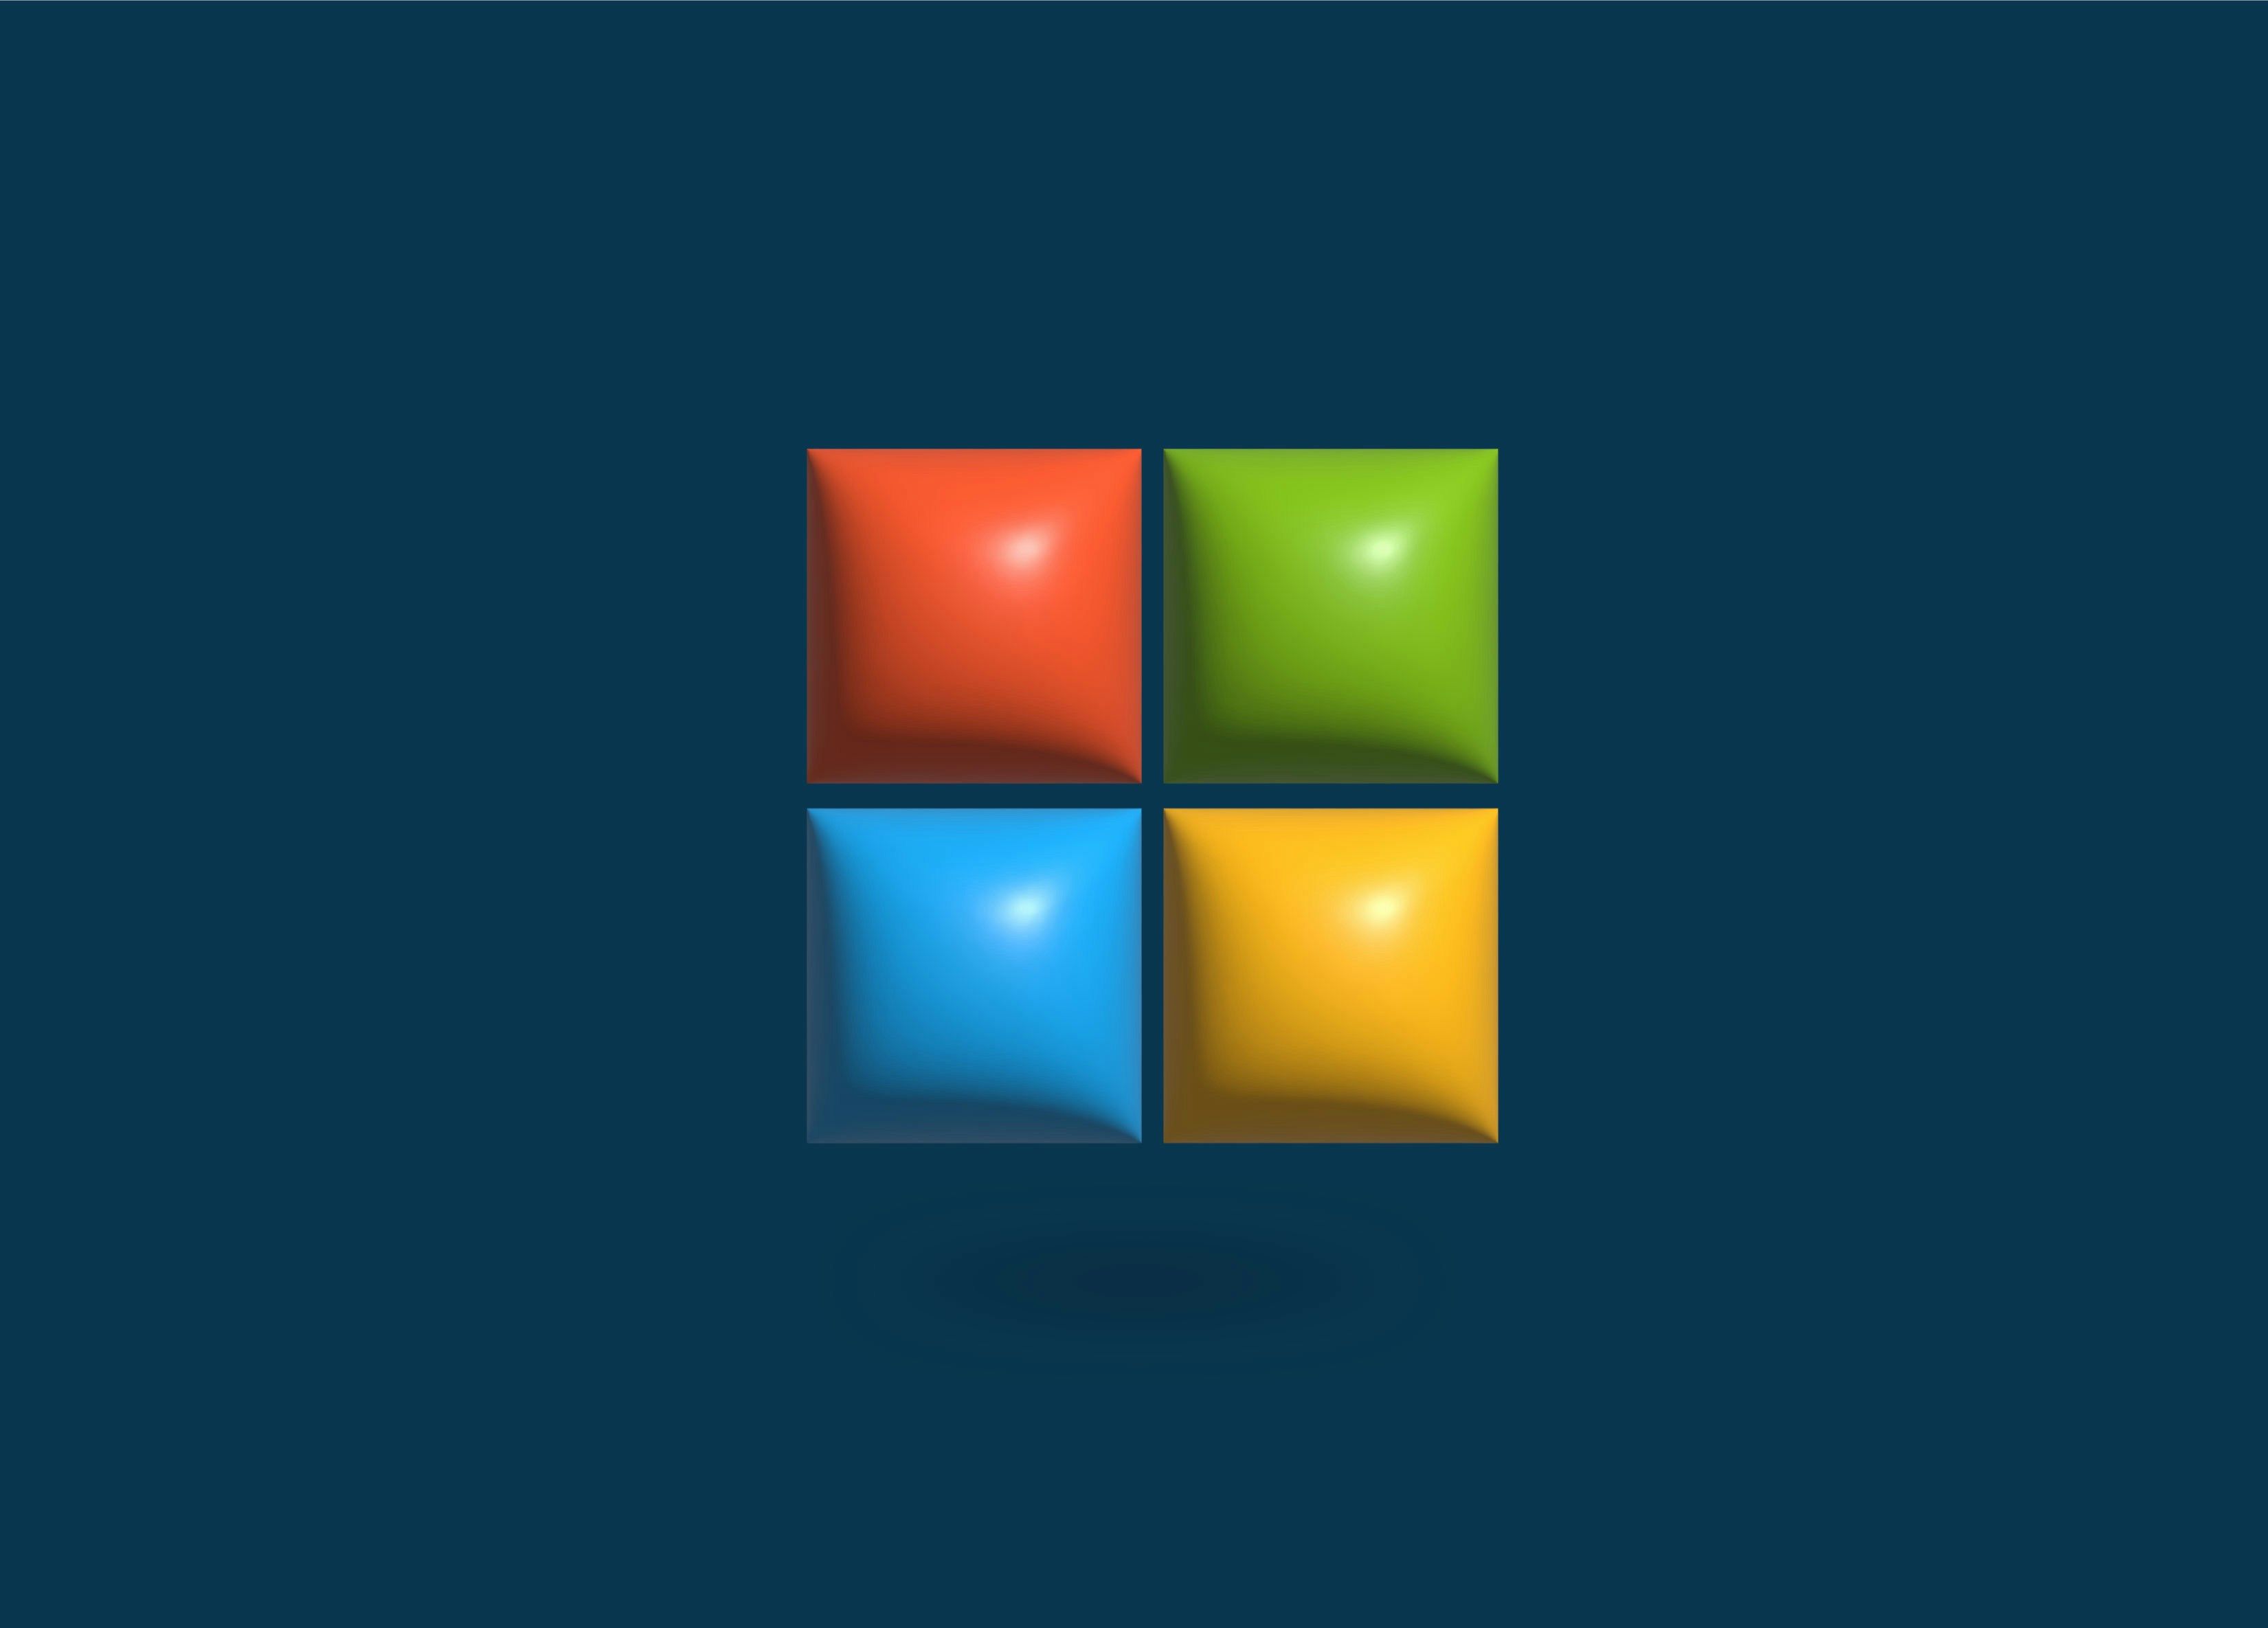 3D Microsoft logo on a blue background